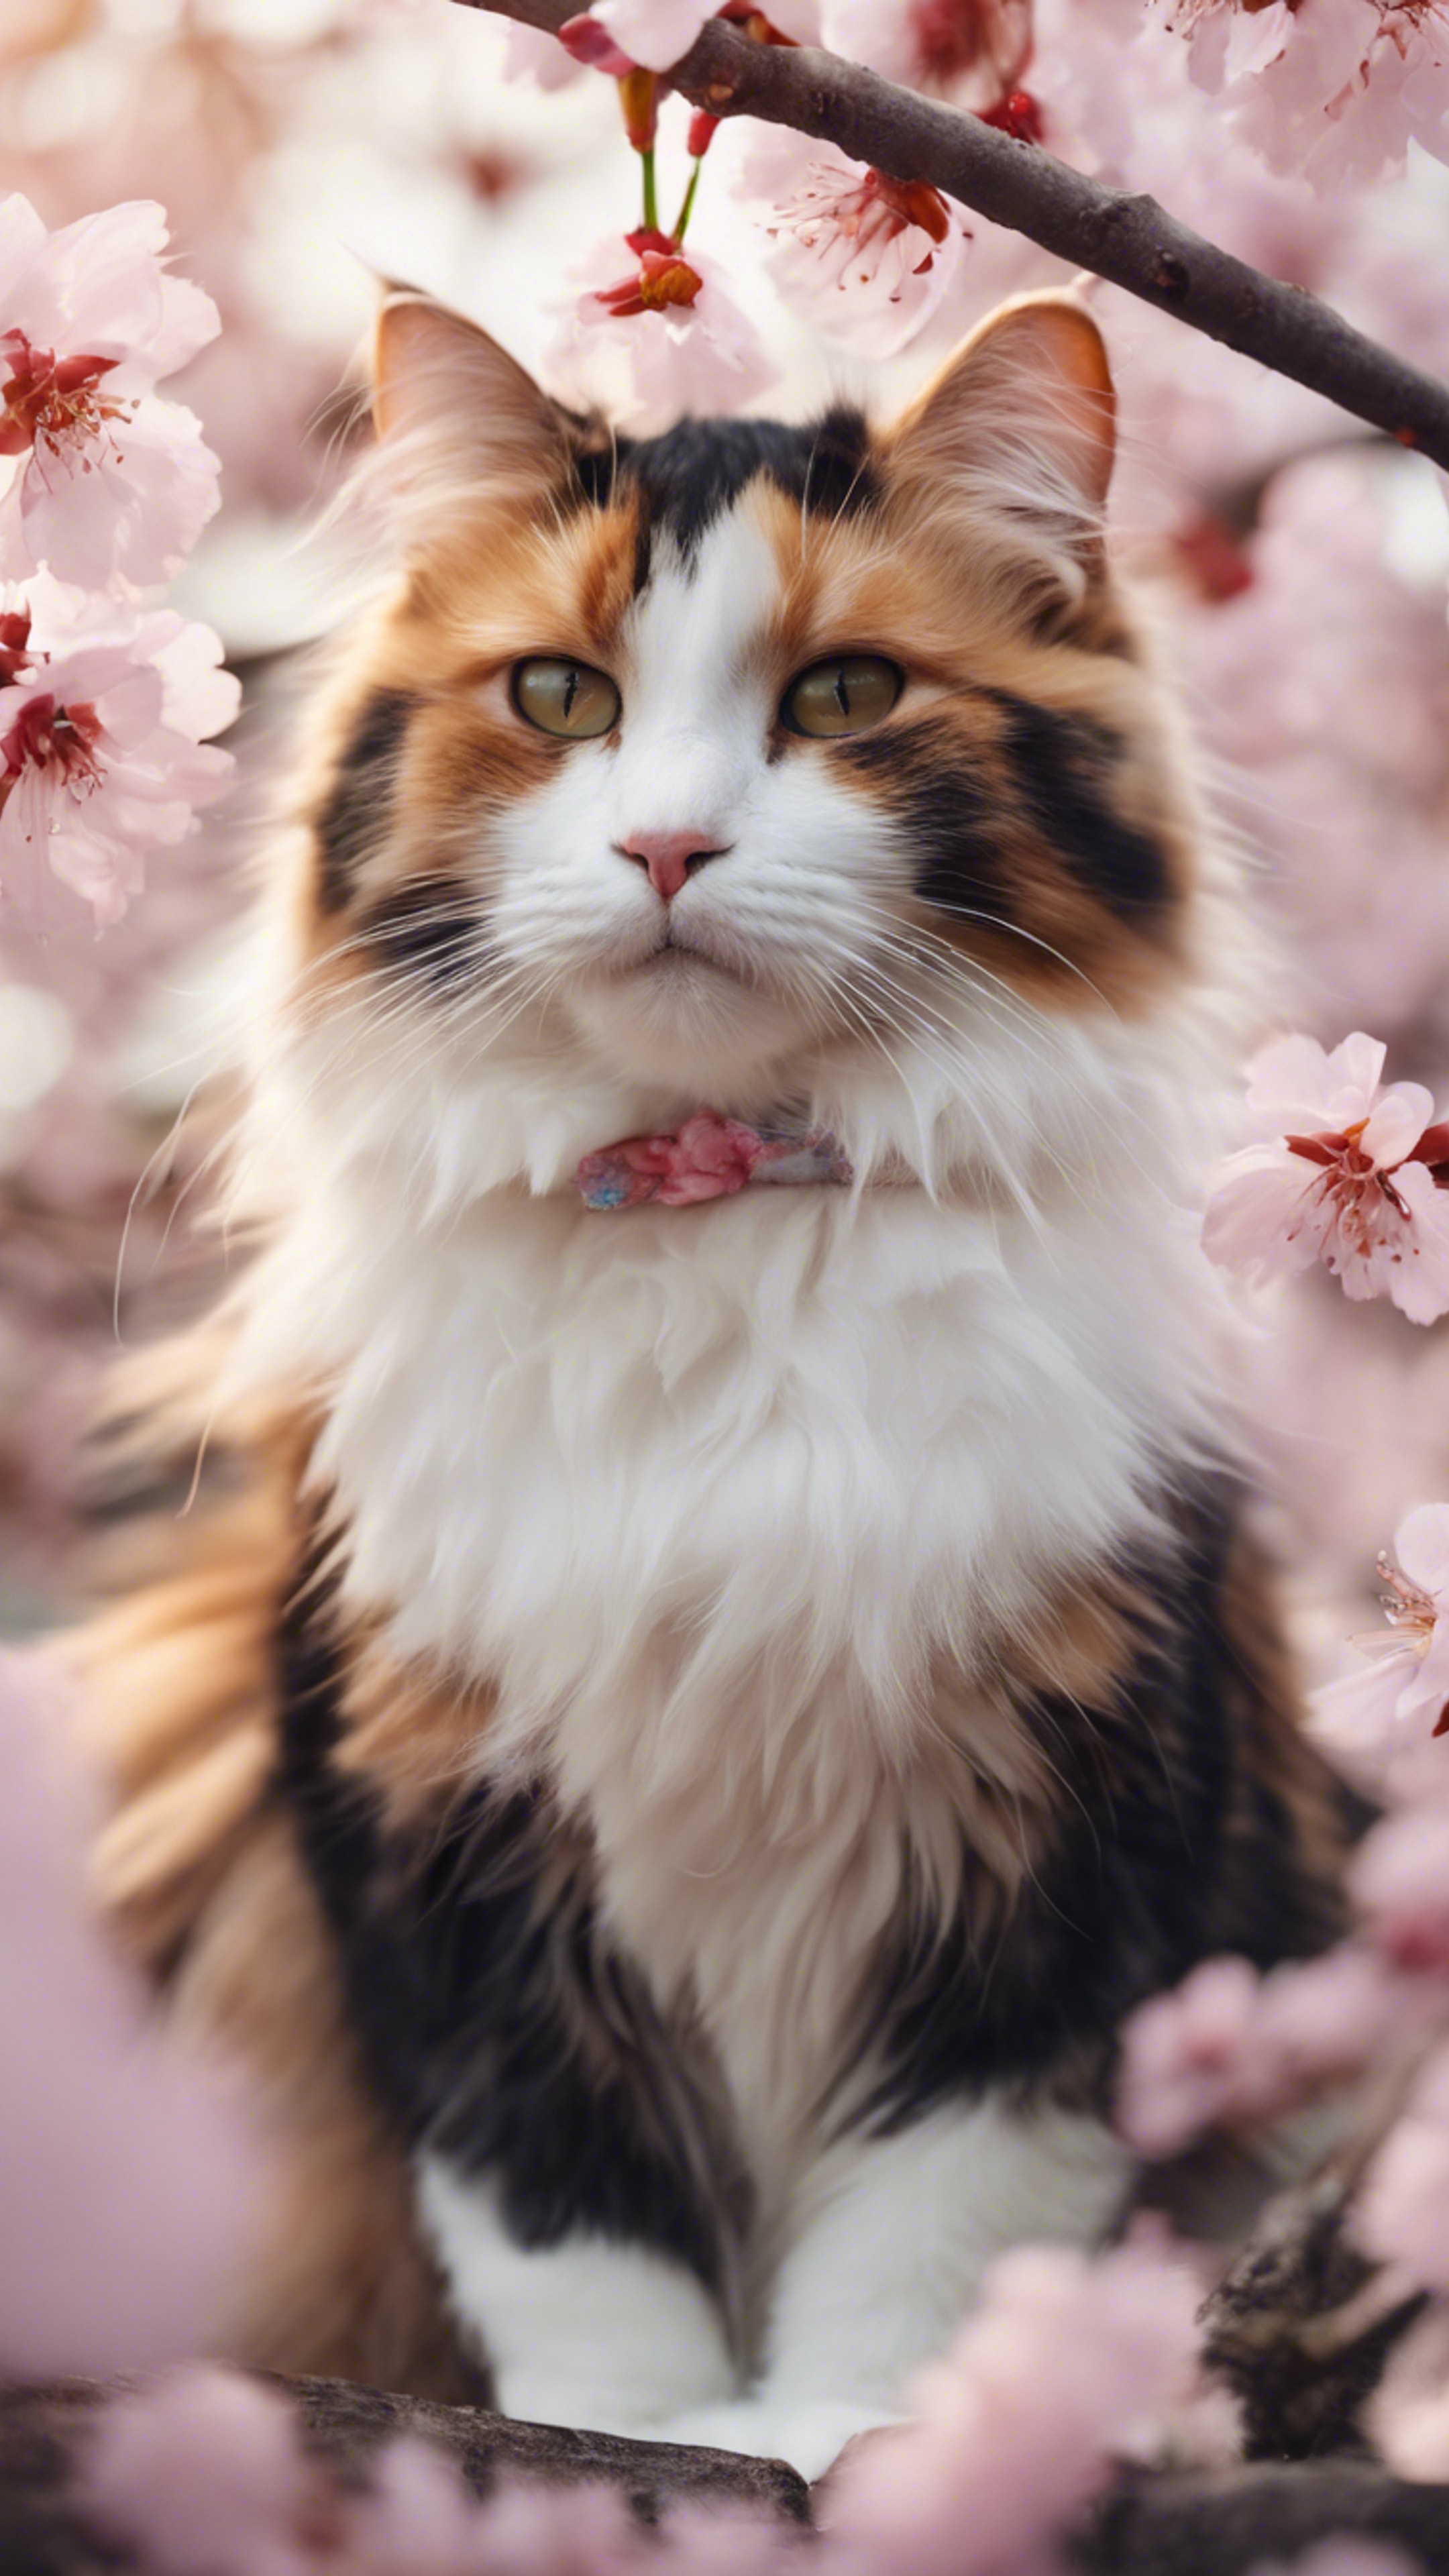 A fluffy calico cat in a cute pose sitting amongst cherry blossoms. Hình nền[3cf3847c7c9c4f38aba7]